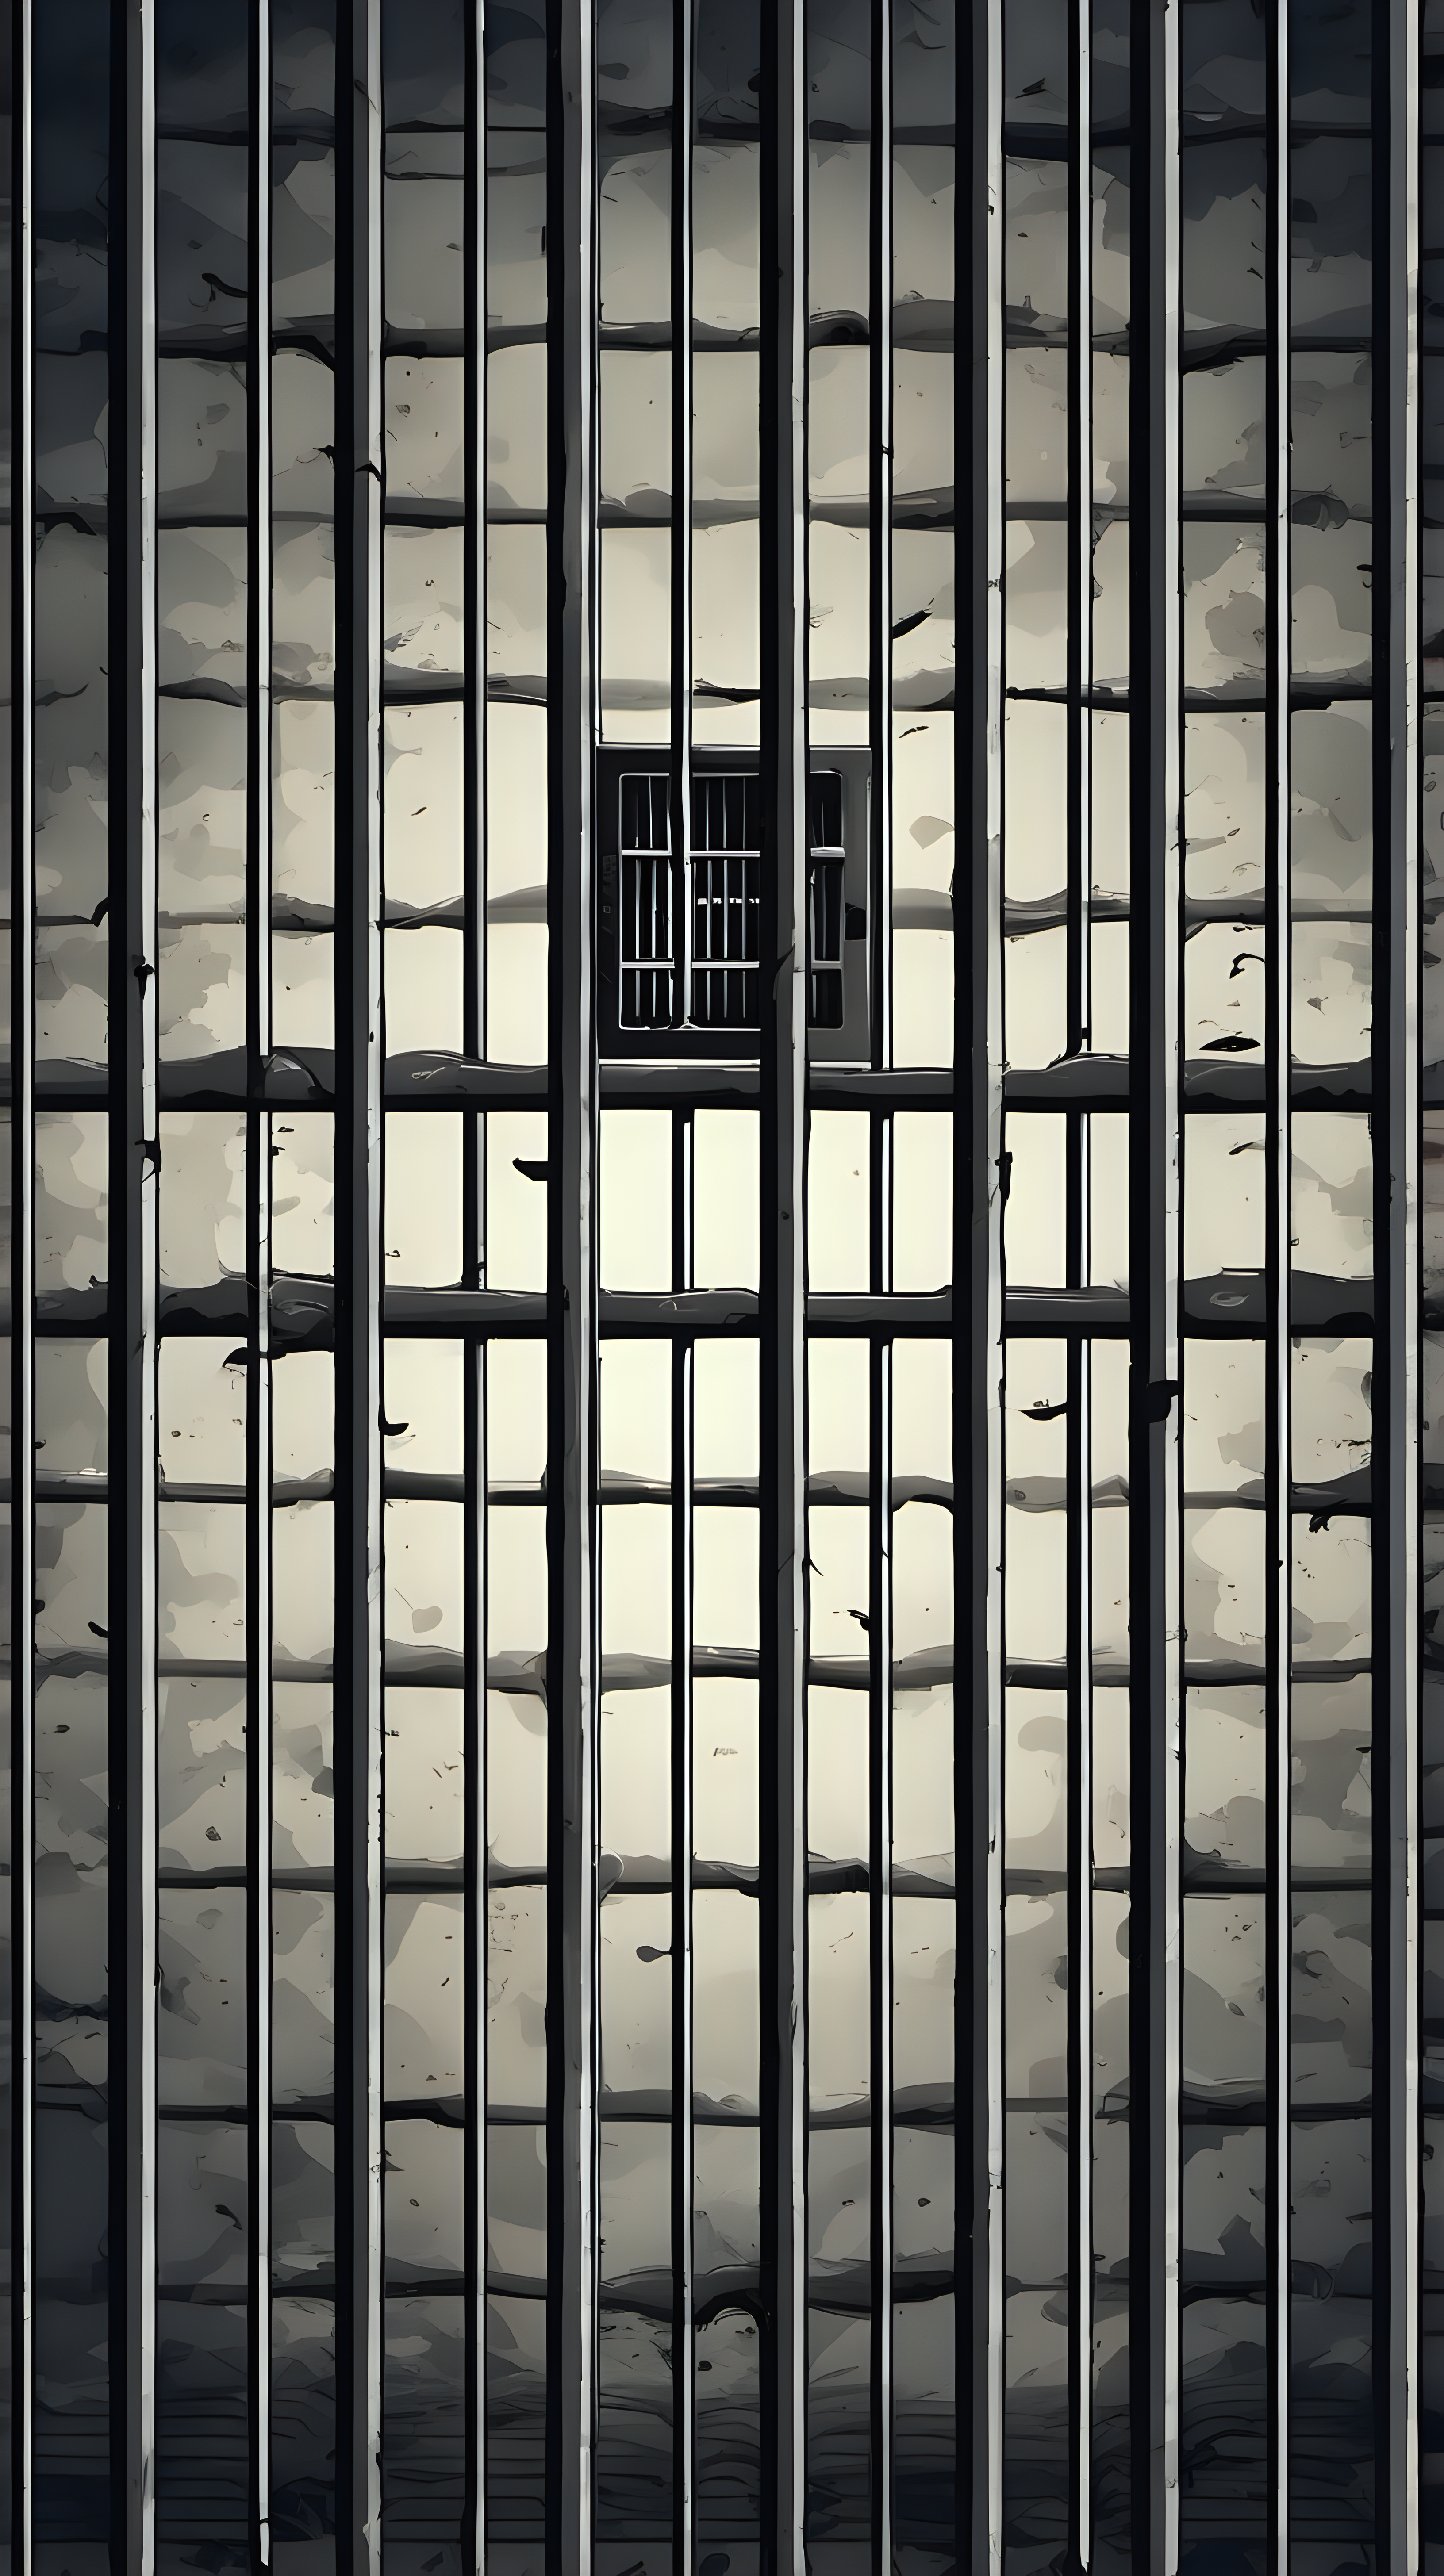 prison bars frightening background